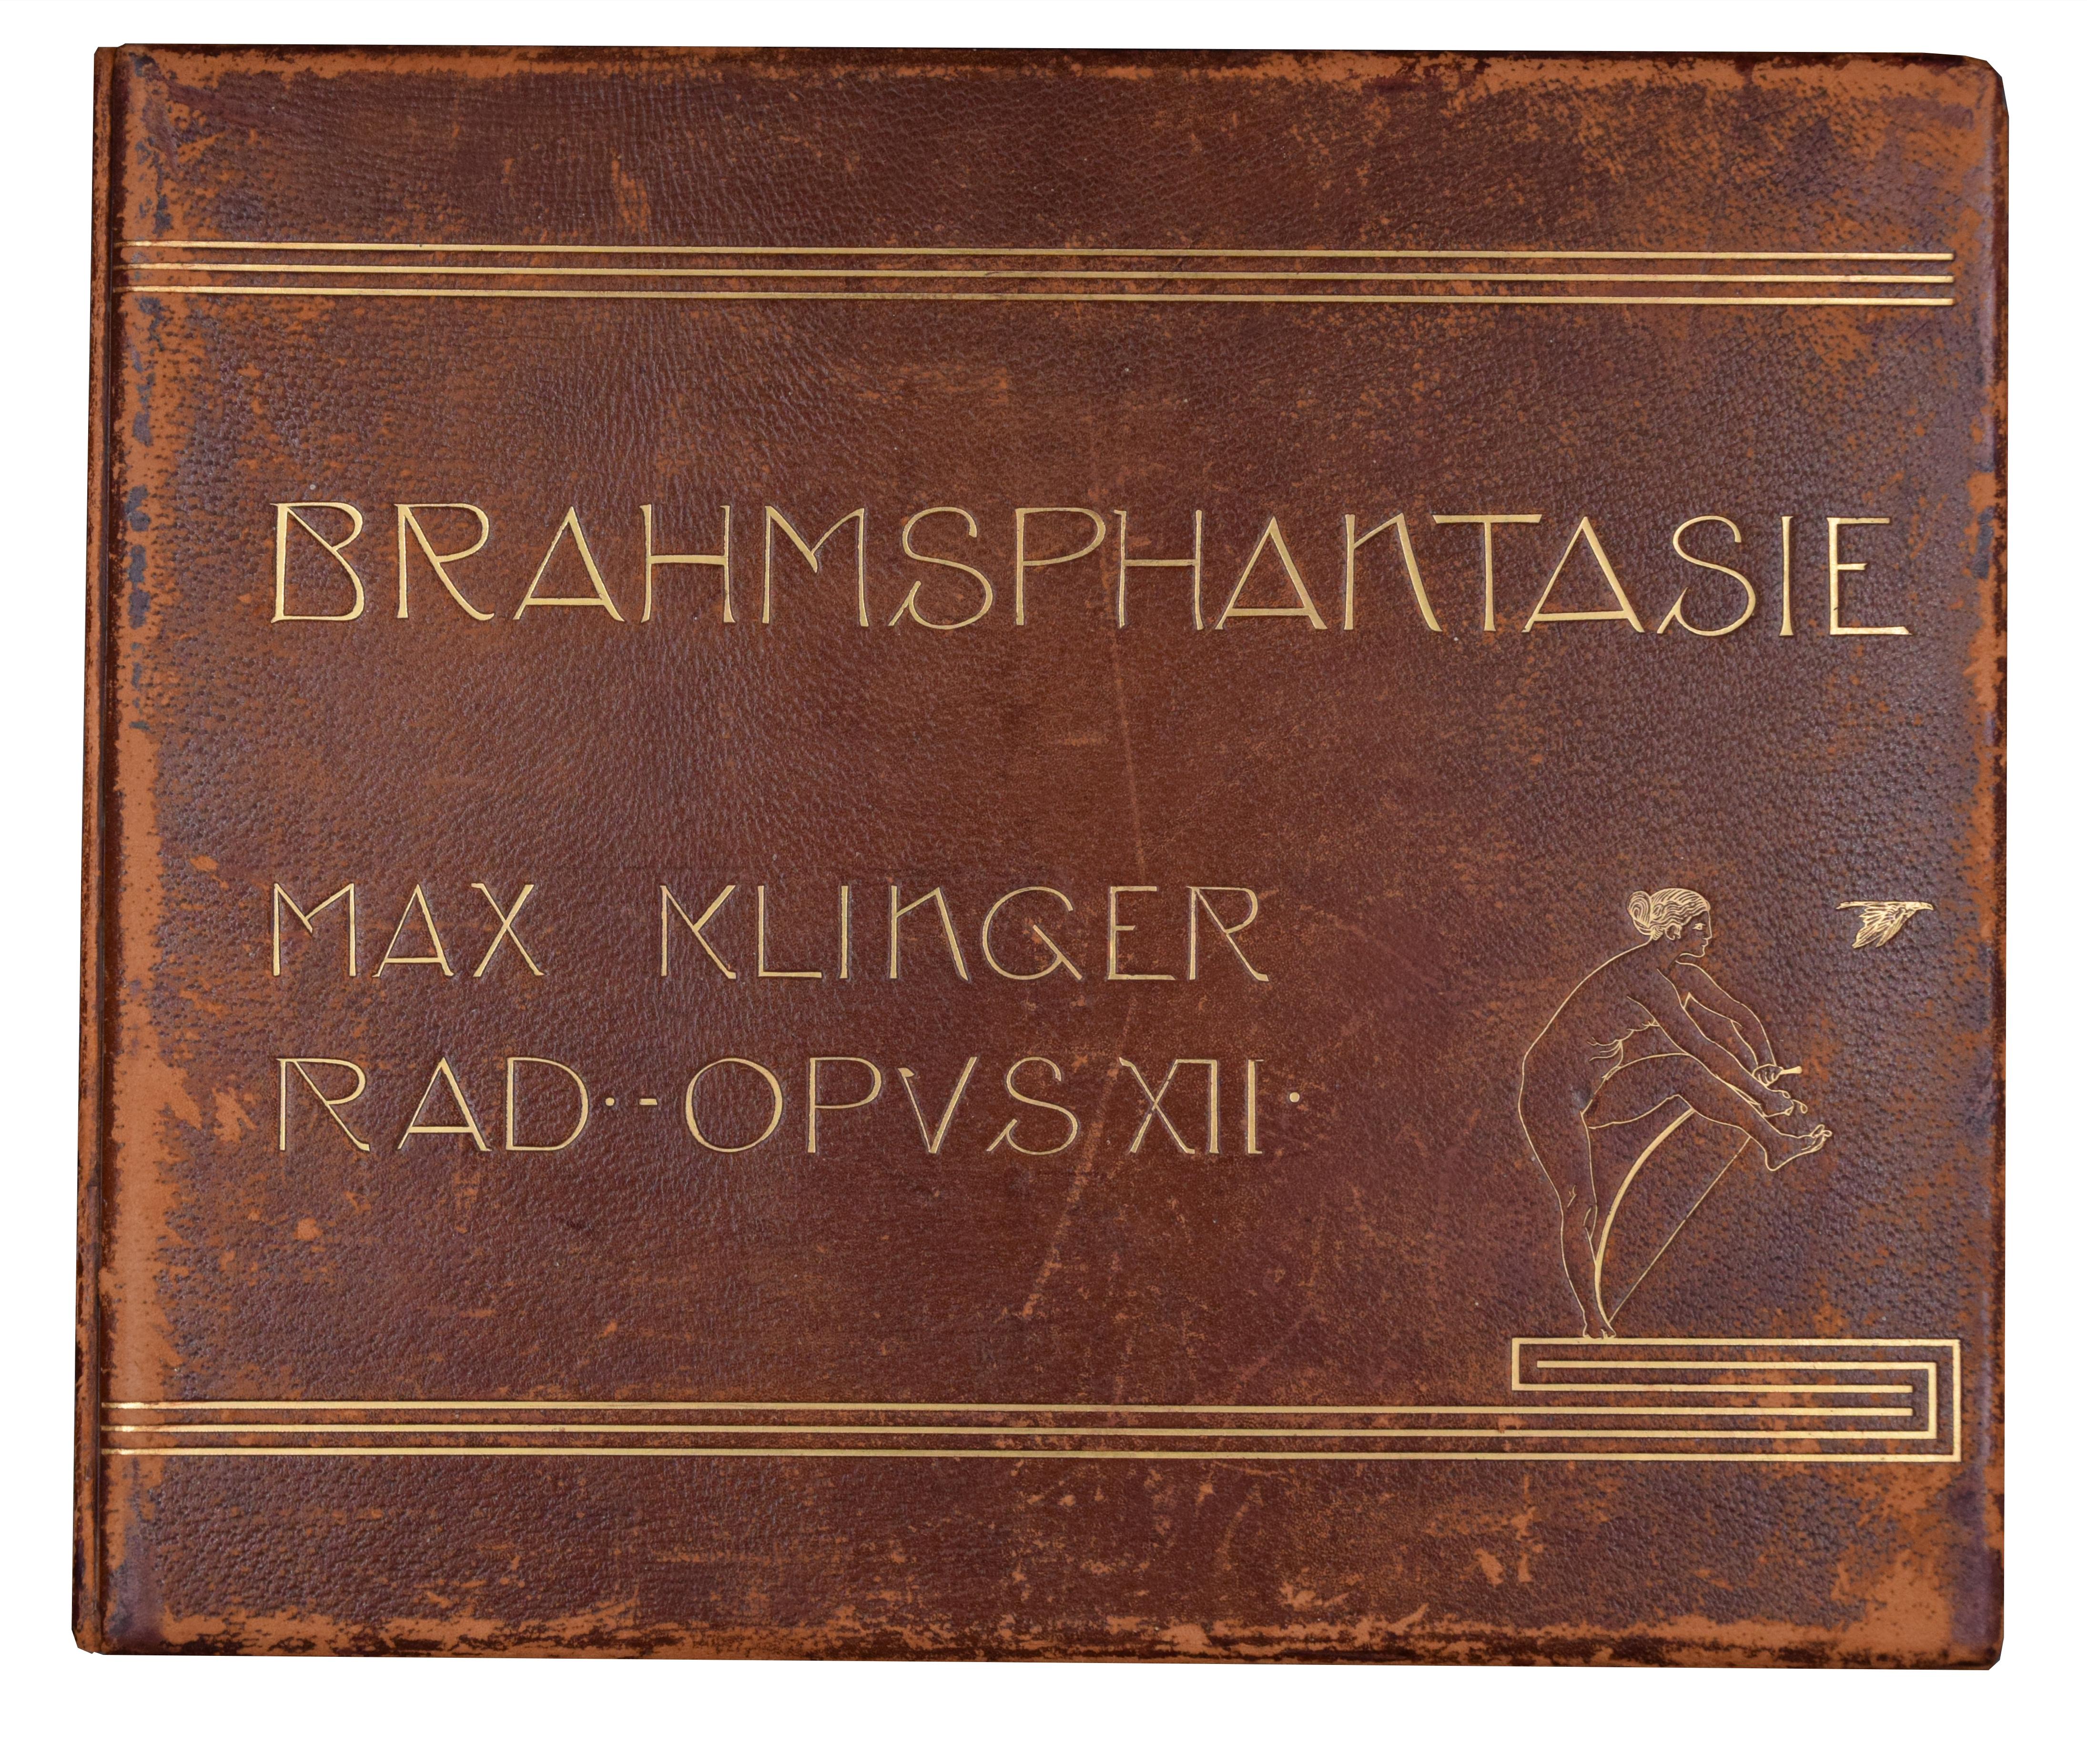 Brahms-Phantasie - Rare Portfolio of 41 Engravings by Max Klinger - 1894 For Sale 11